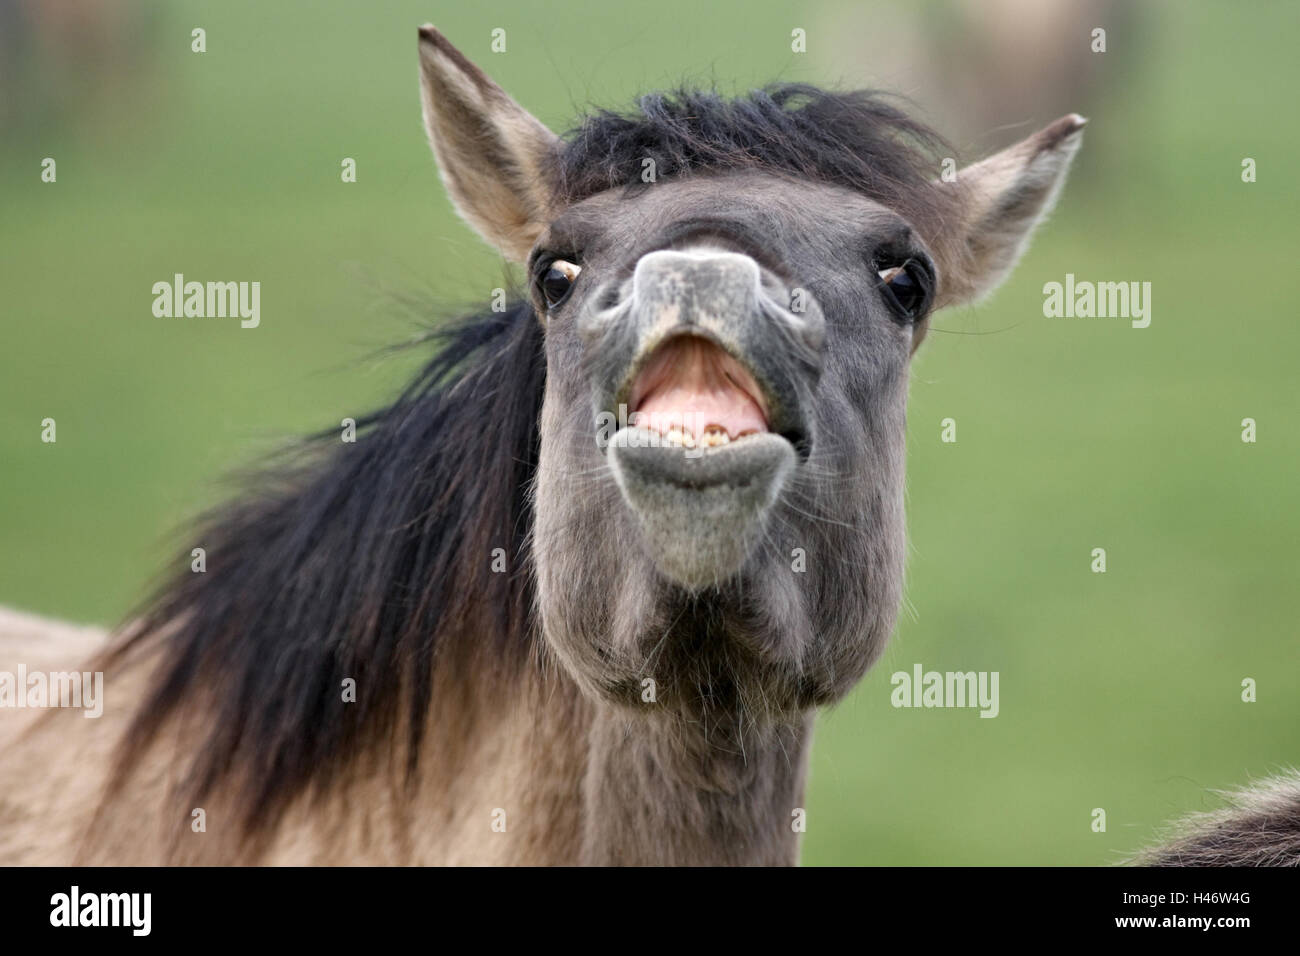 Dulmen Pony, flehmen, portrait, Stock Photo